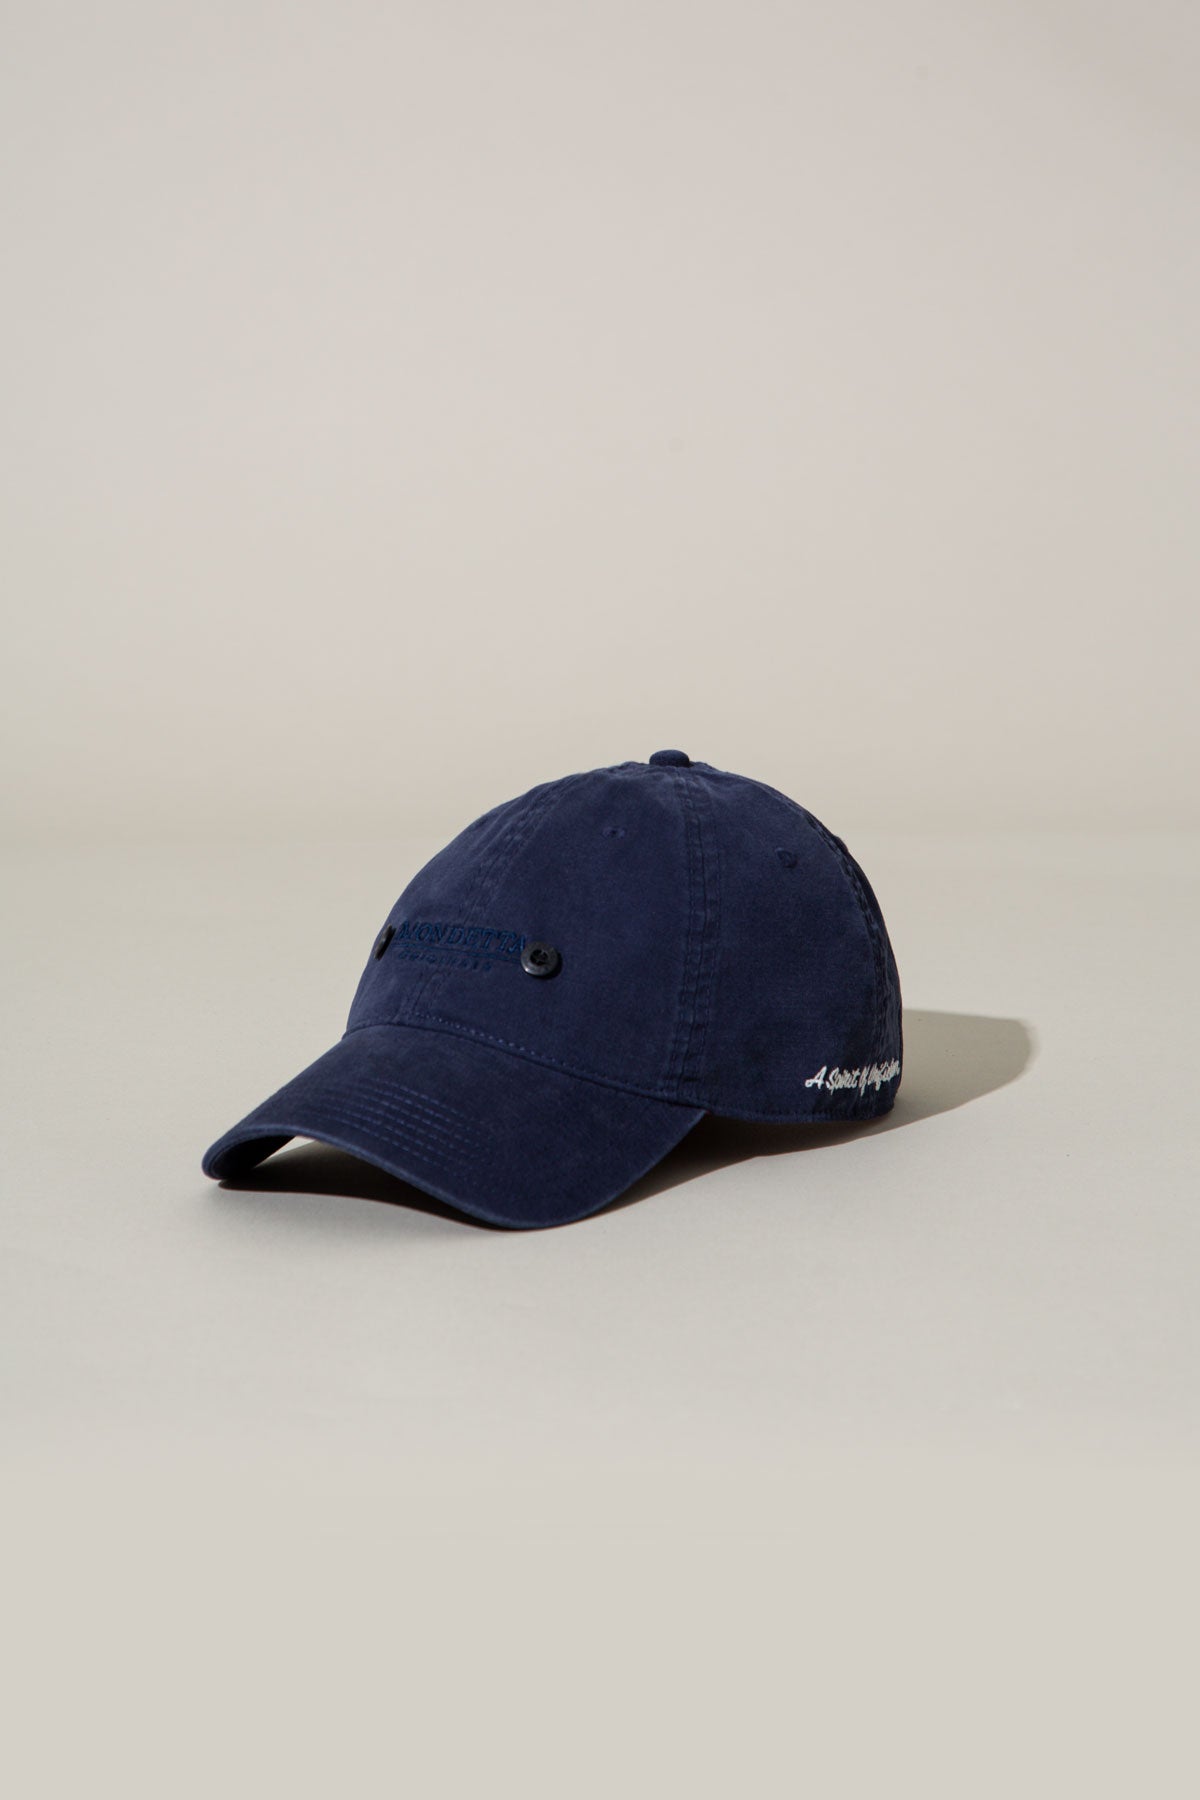 Heads Up Baseball Hat